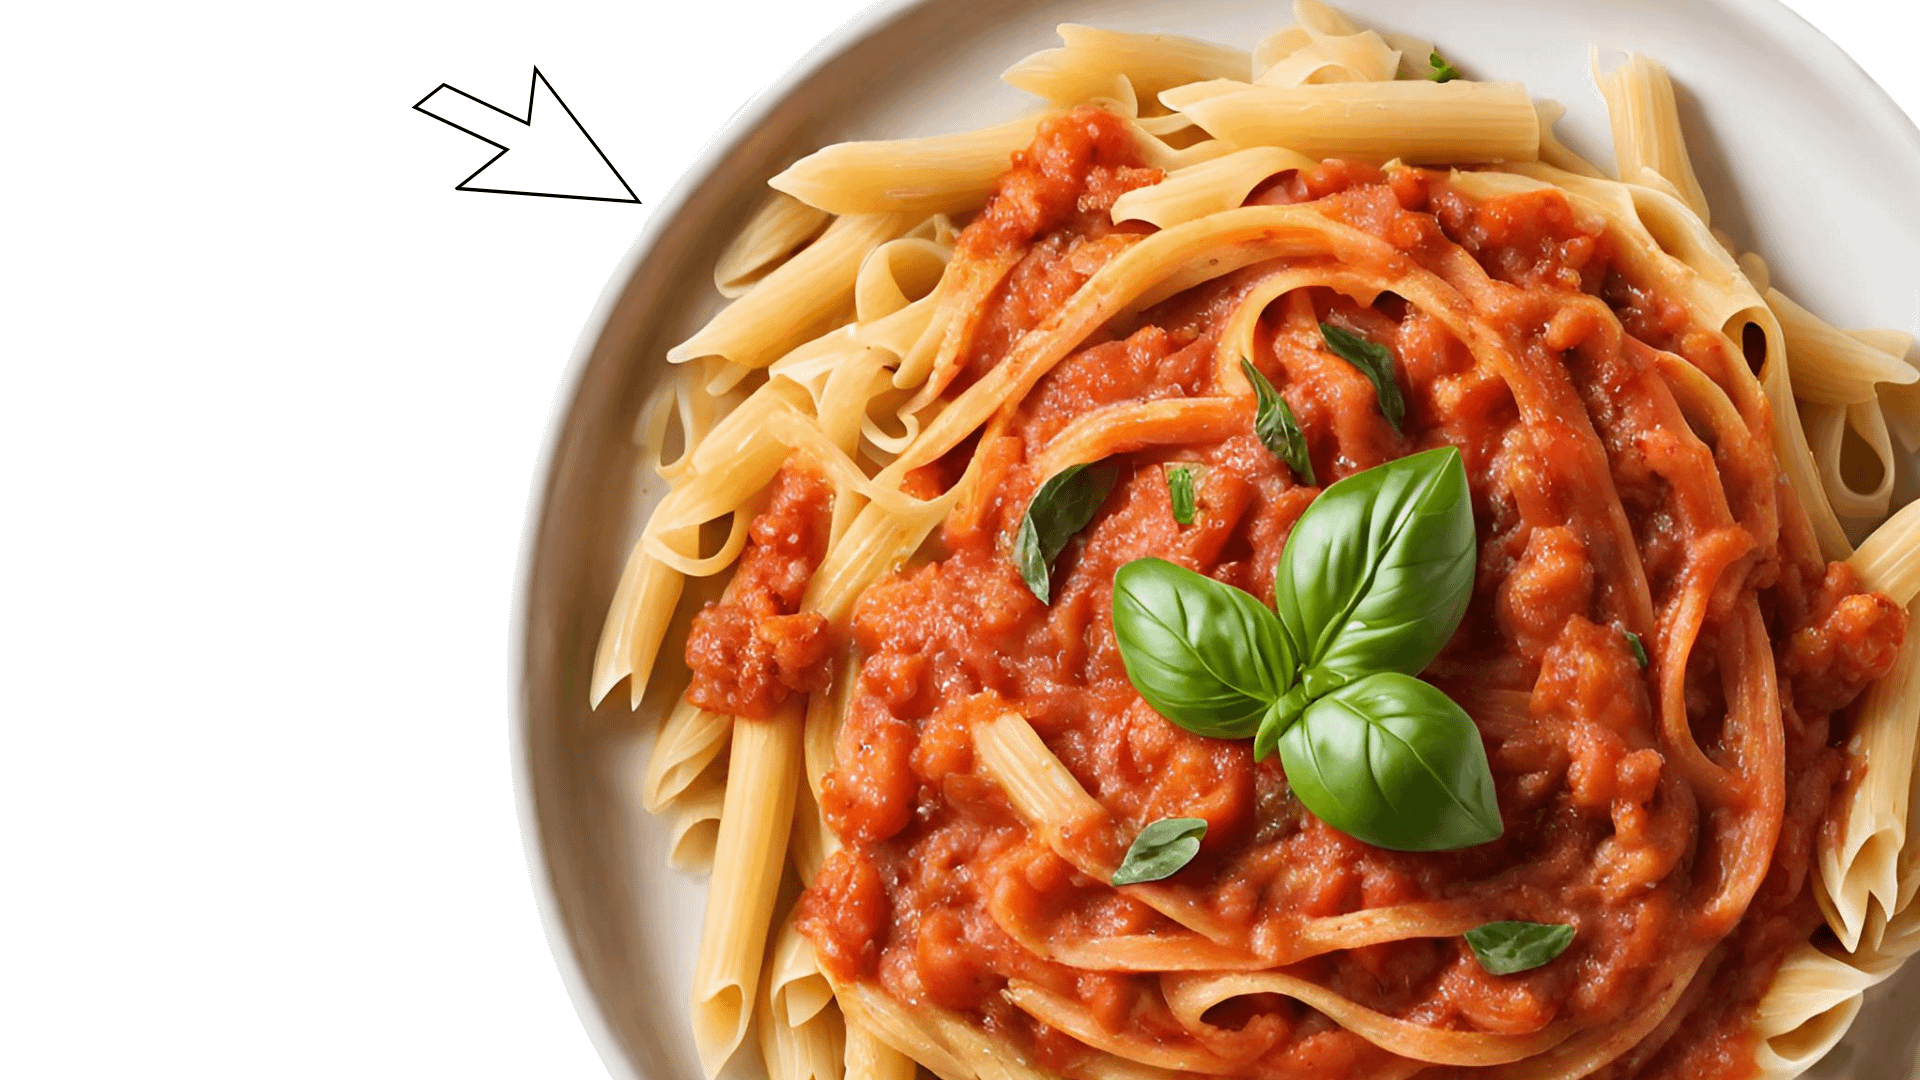 100% italian ingredients